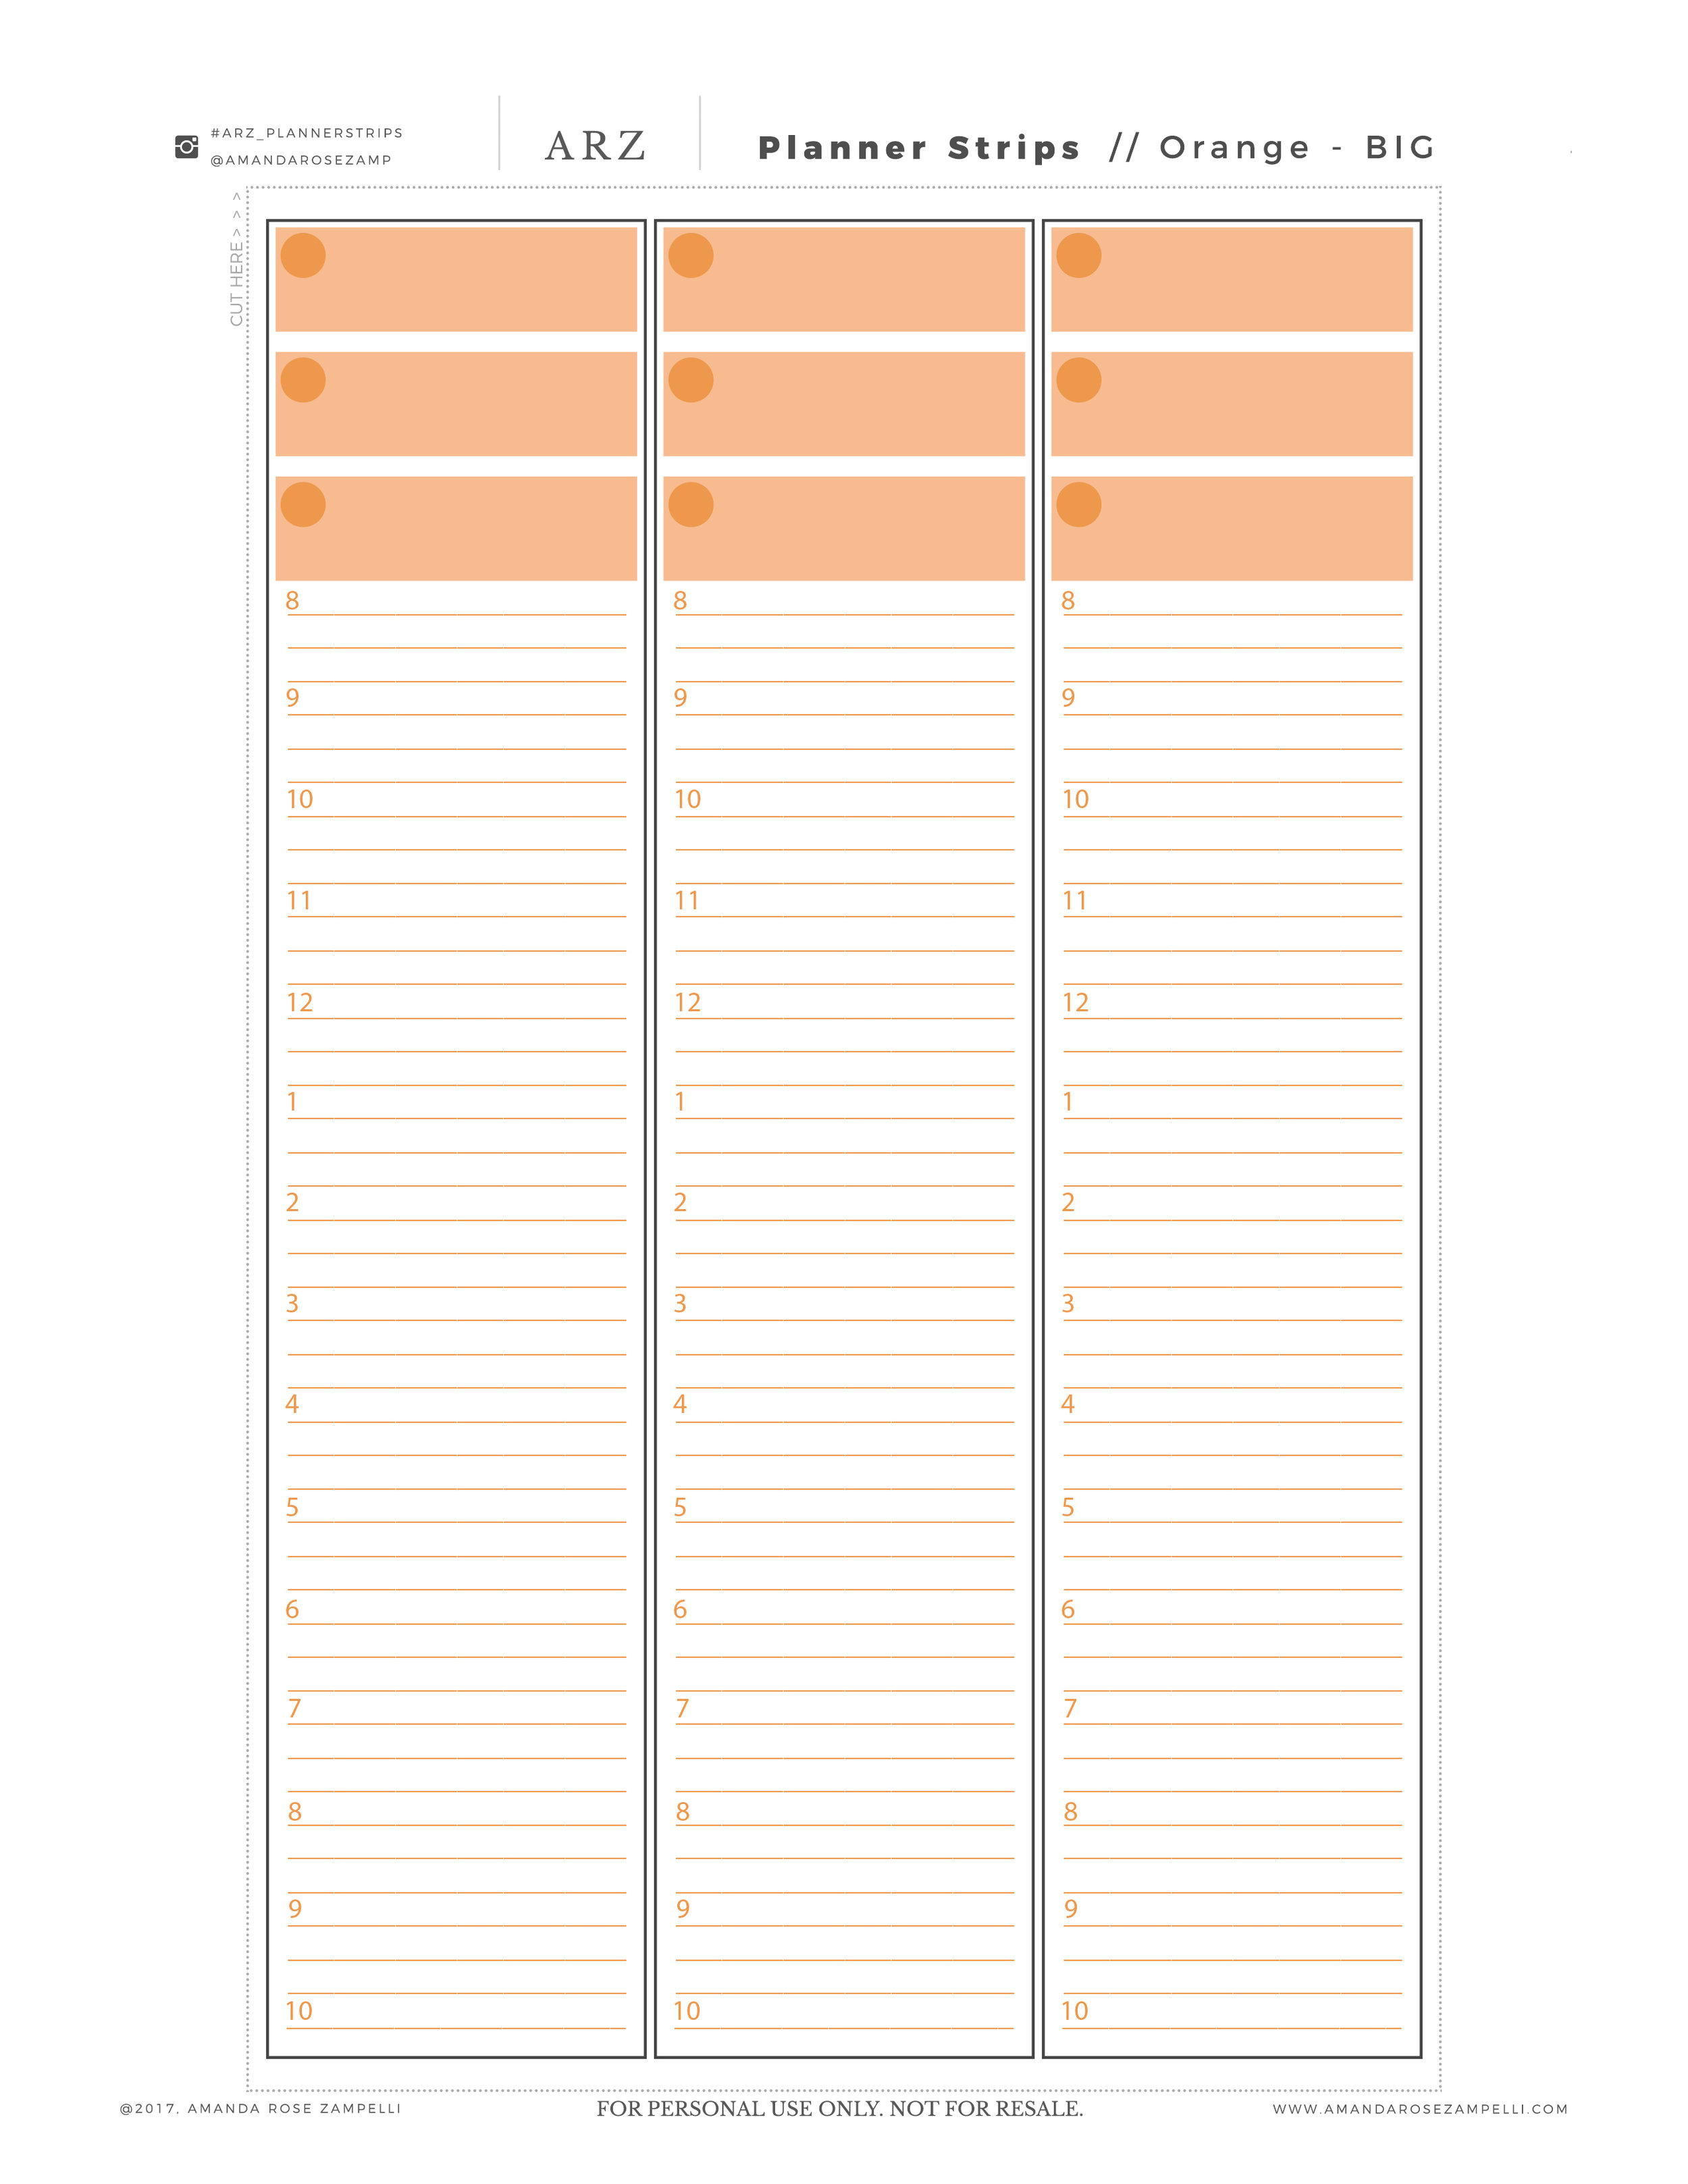 03 BIG orange M - W planner strips.jpg